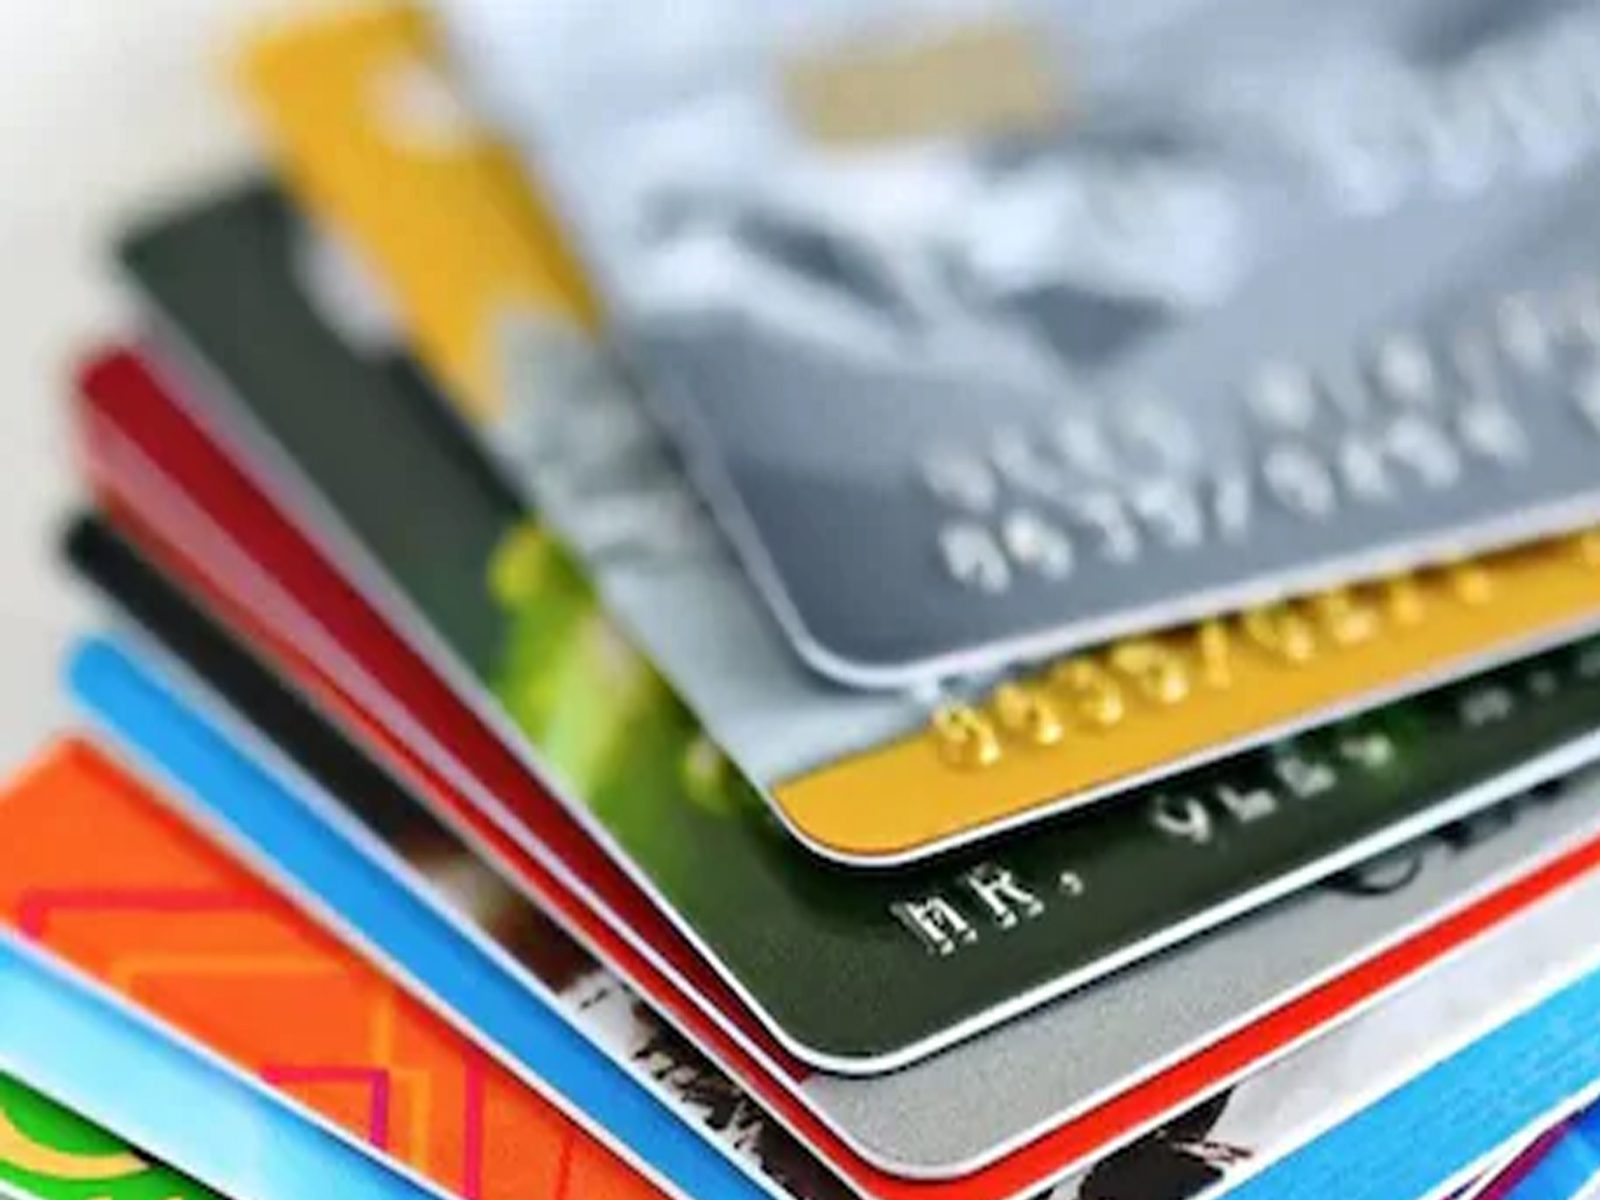 Credit Card: ਜਾਣੋ ਇੱਕ ਤੋਂ ਵੱਧ ਕਰੈਡਿਟ ਕਾਰਡ ਰੱਖਣ ਦੇ ਕਿ ਹਨ ਫ਼ਾਇਦੇ